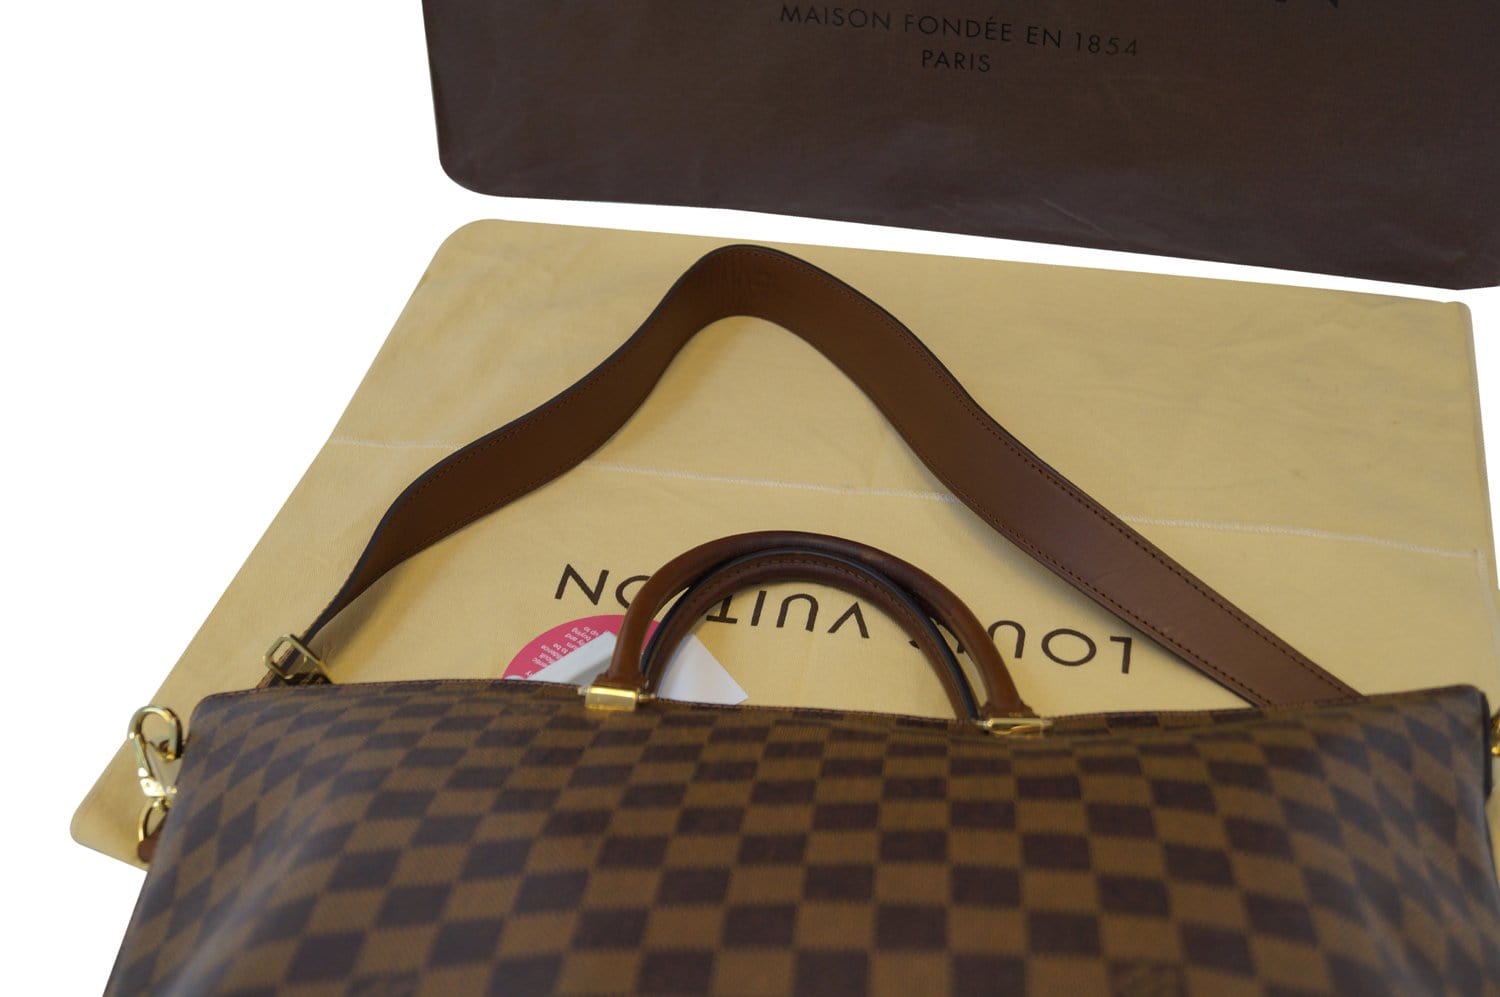 Authentic Louis Vuitton Belmont Tote Work Bag in Damier Ebene